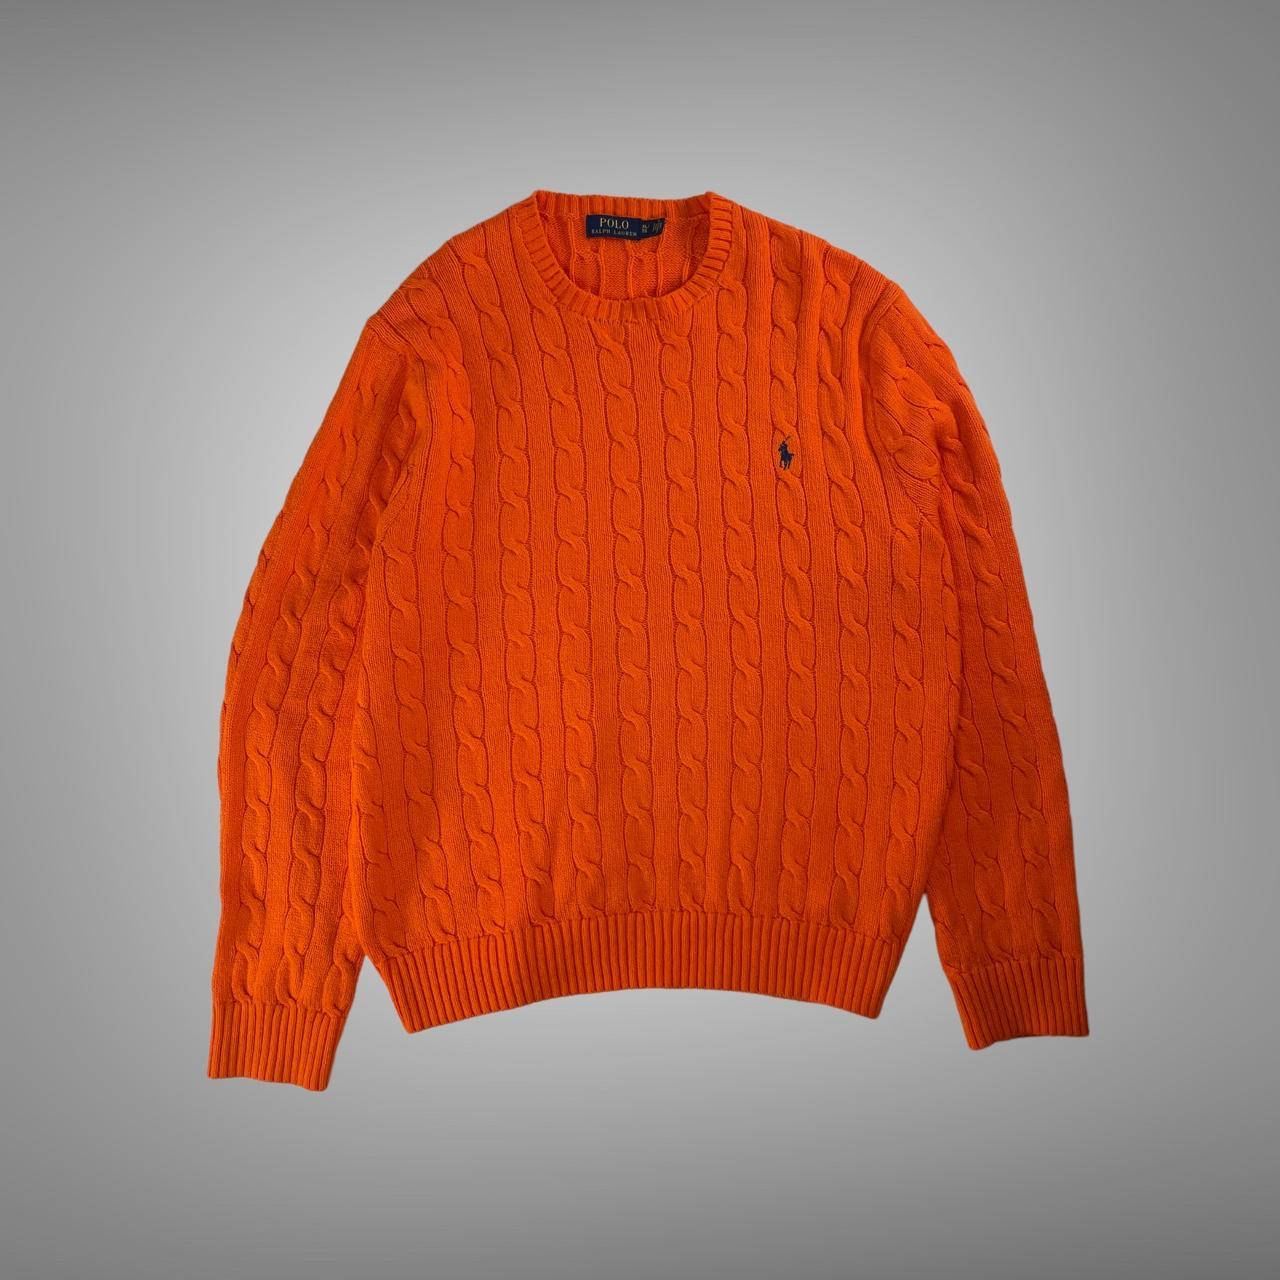 POLO RALPH LAUREN CABLE-KNIT COTTON SWEATER, Orange Men's Sweater